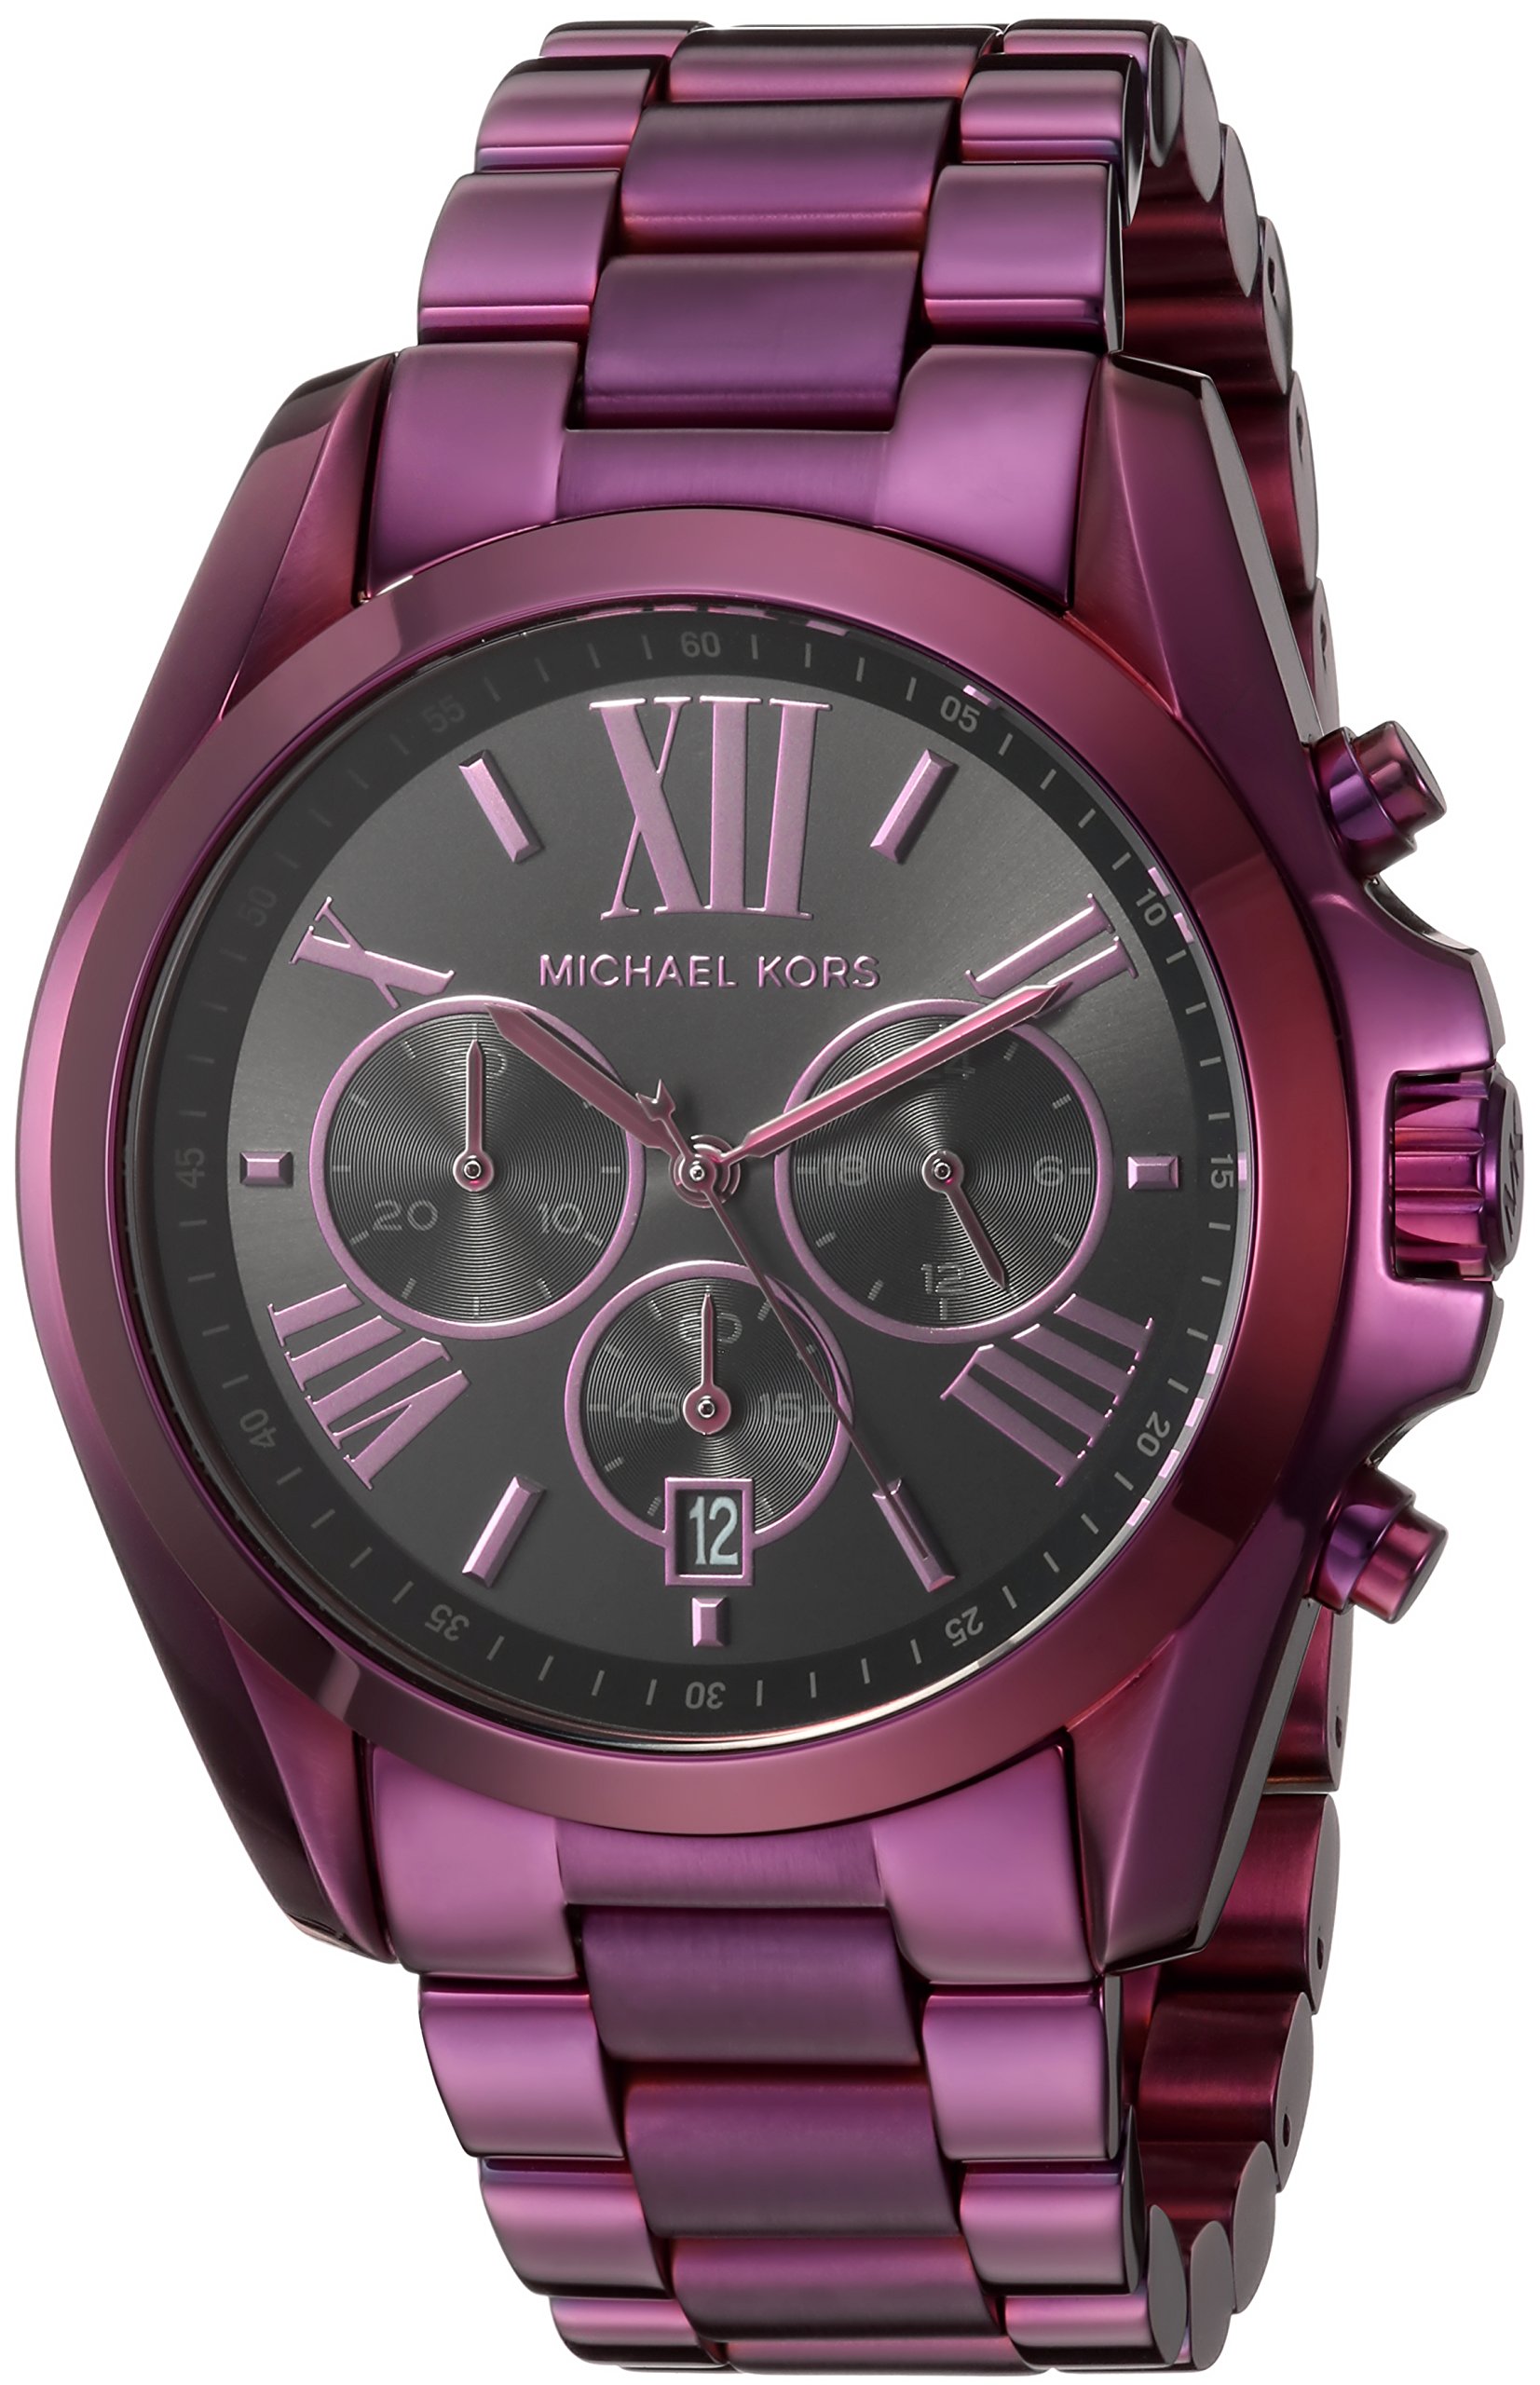 Michael Kors Women's MK6398 Bradshaw Analog Display Quartz Purple Watch